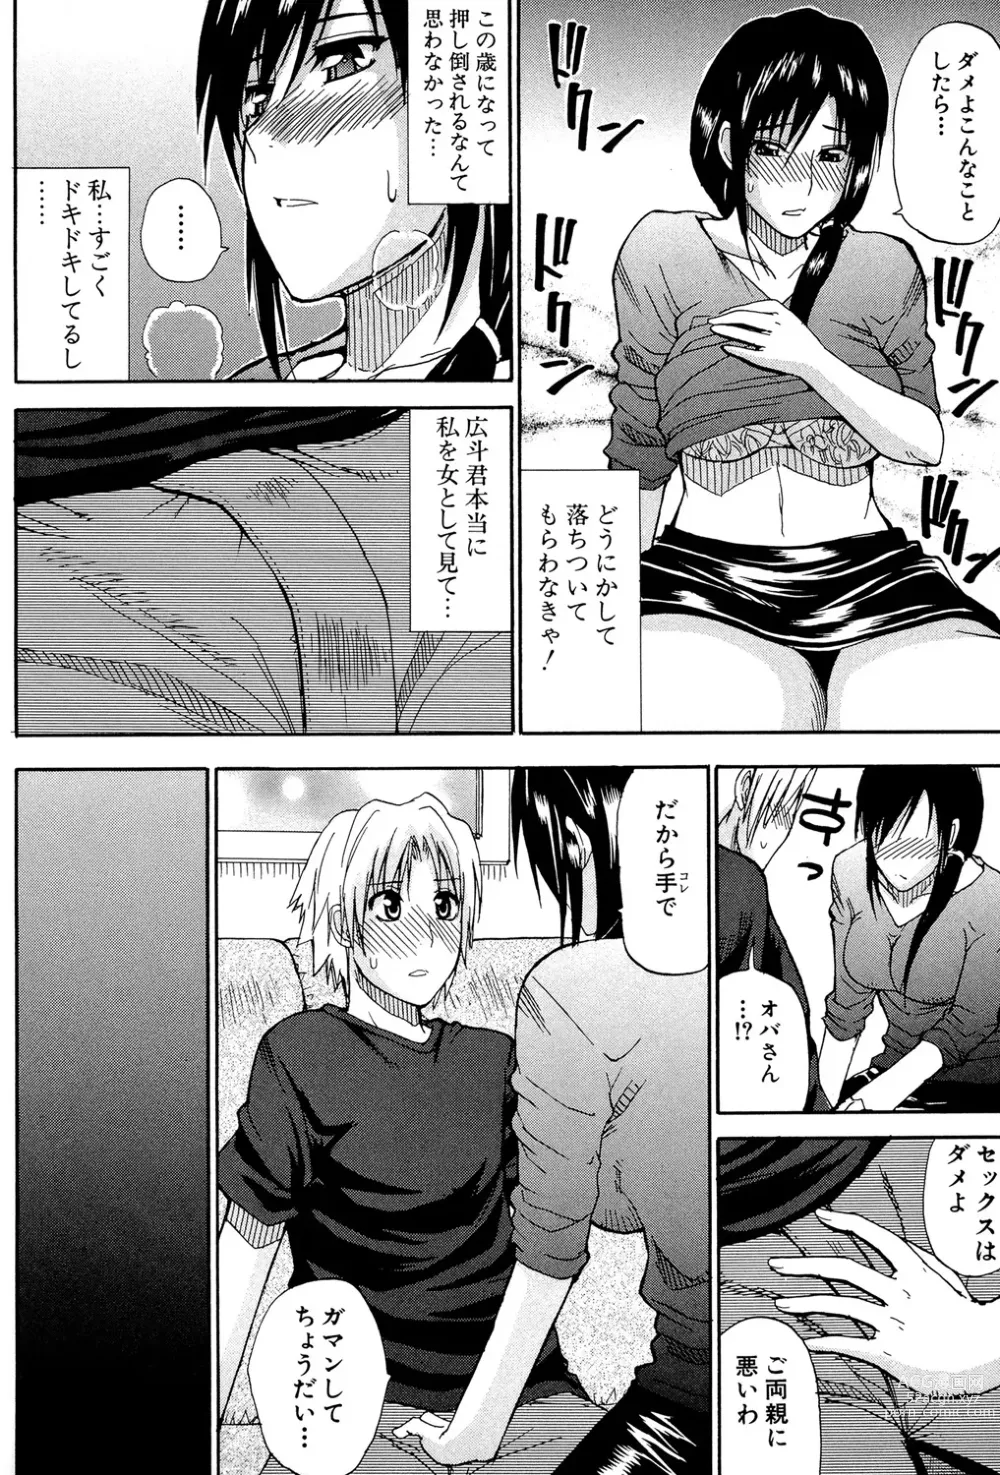 Page 15 of manga Venus Rhapsody